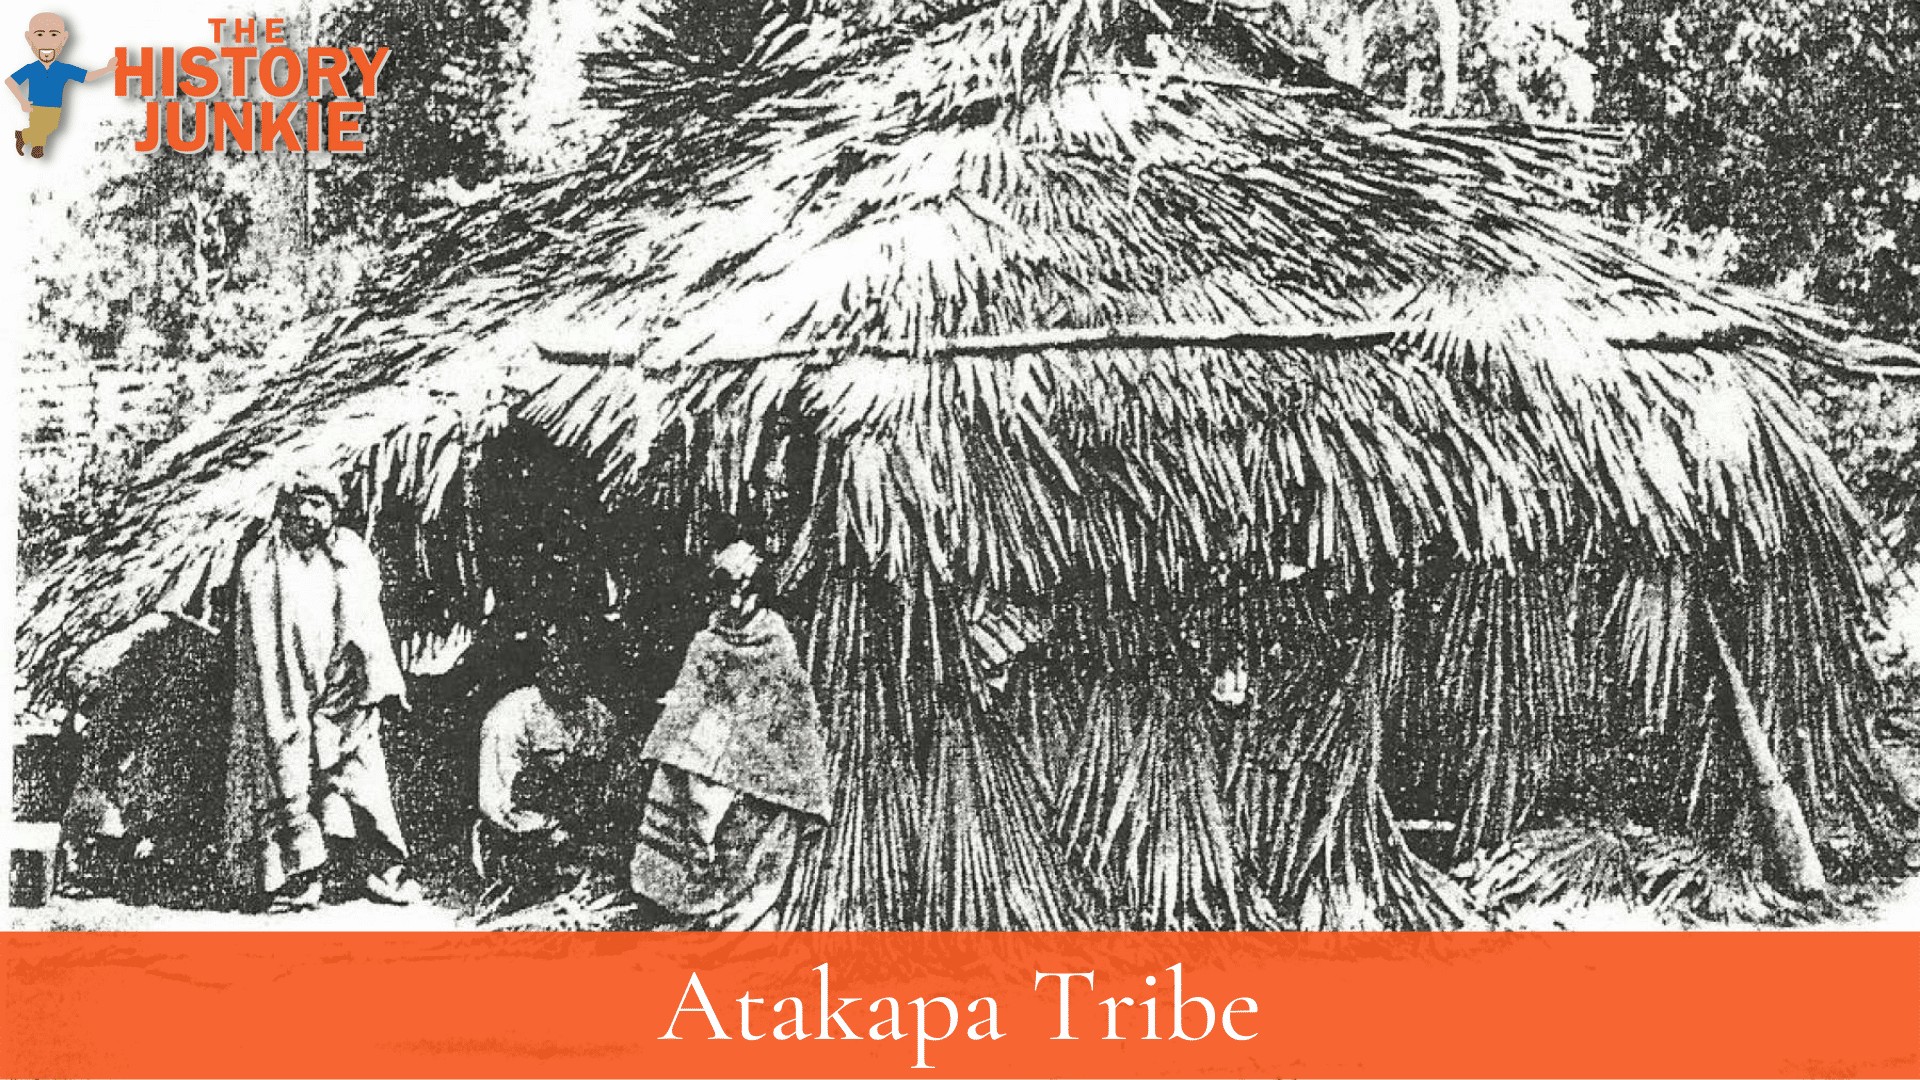 Atakapa Tribe